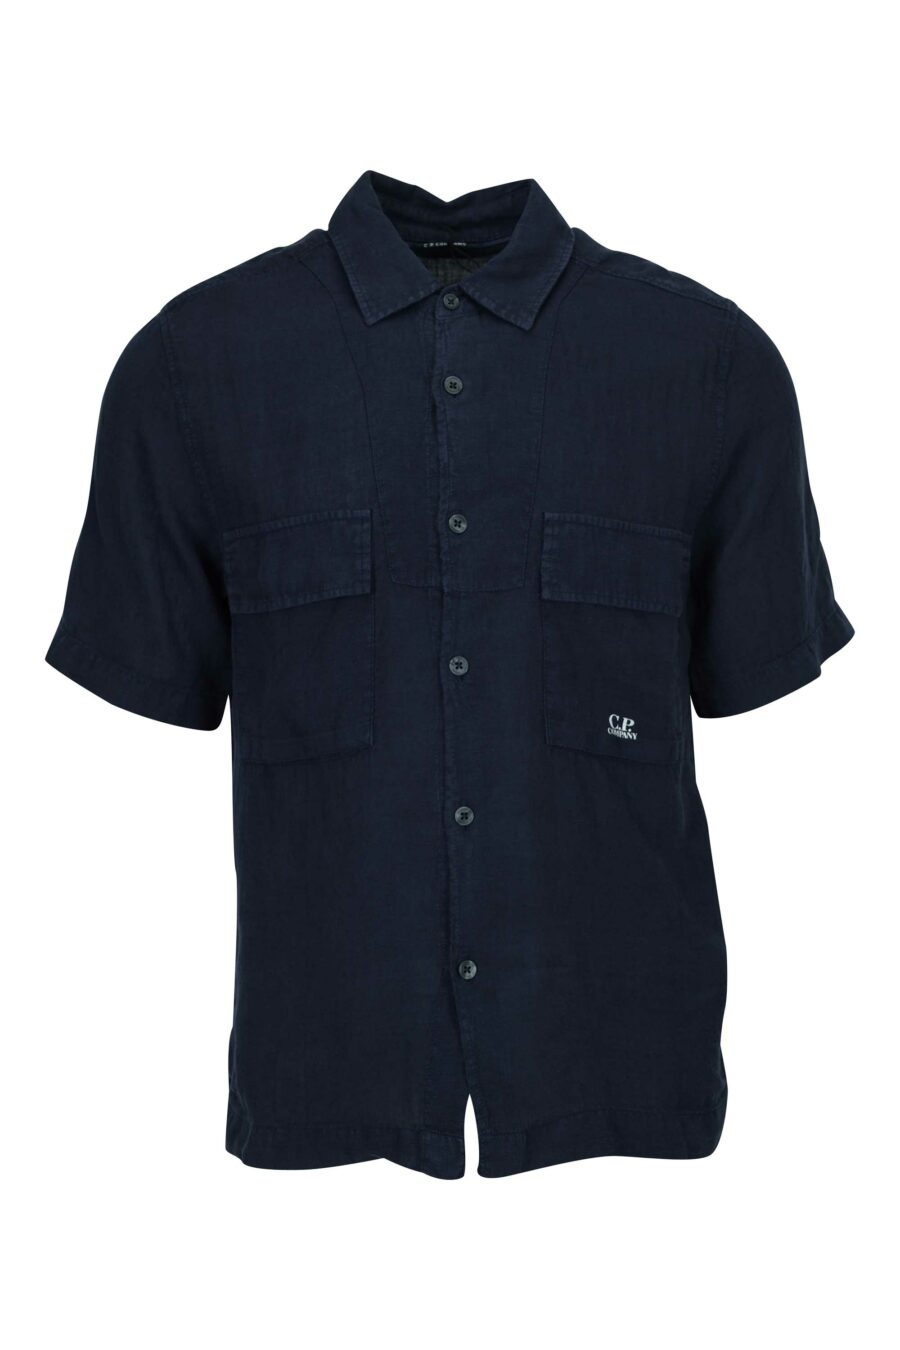 Camisa manga corta azul oscuro con botones y bolsillos con minilogo - 7620943812053